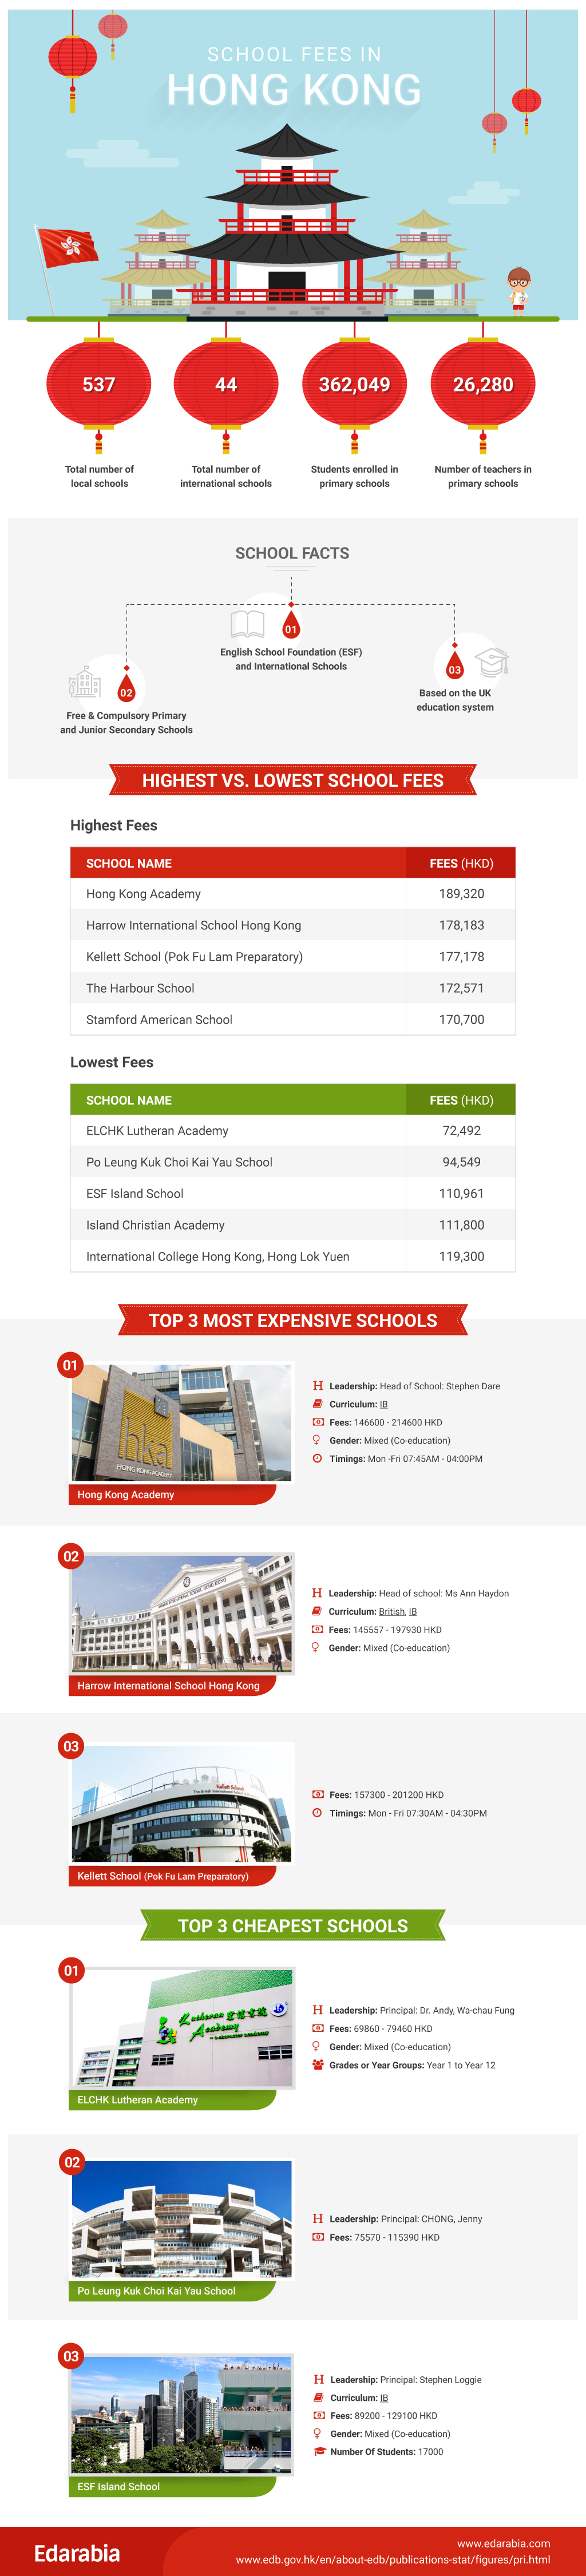 schools in hong kong infographic